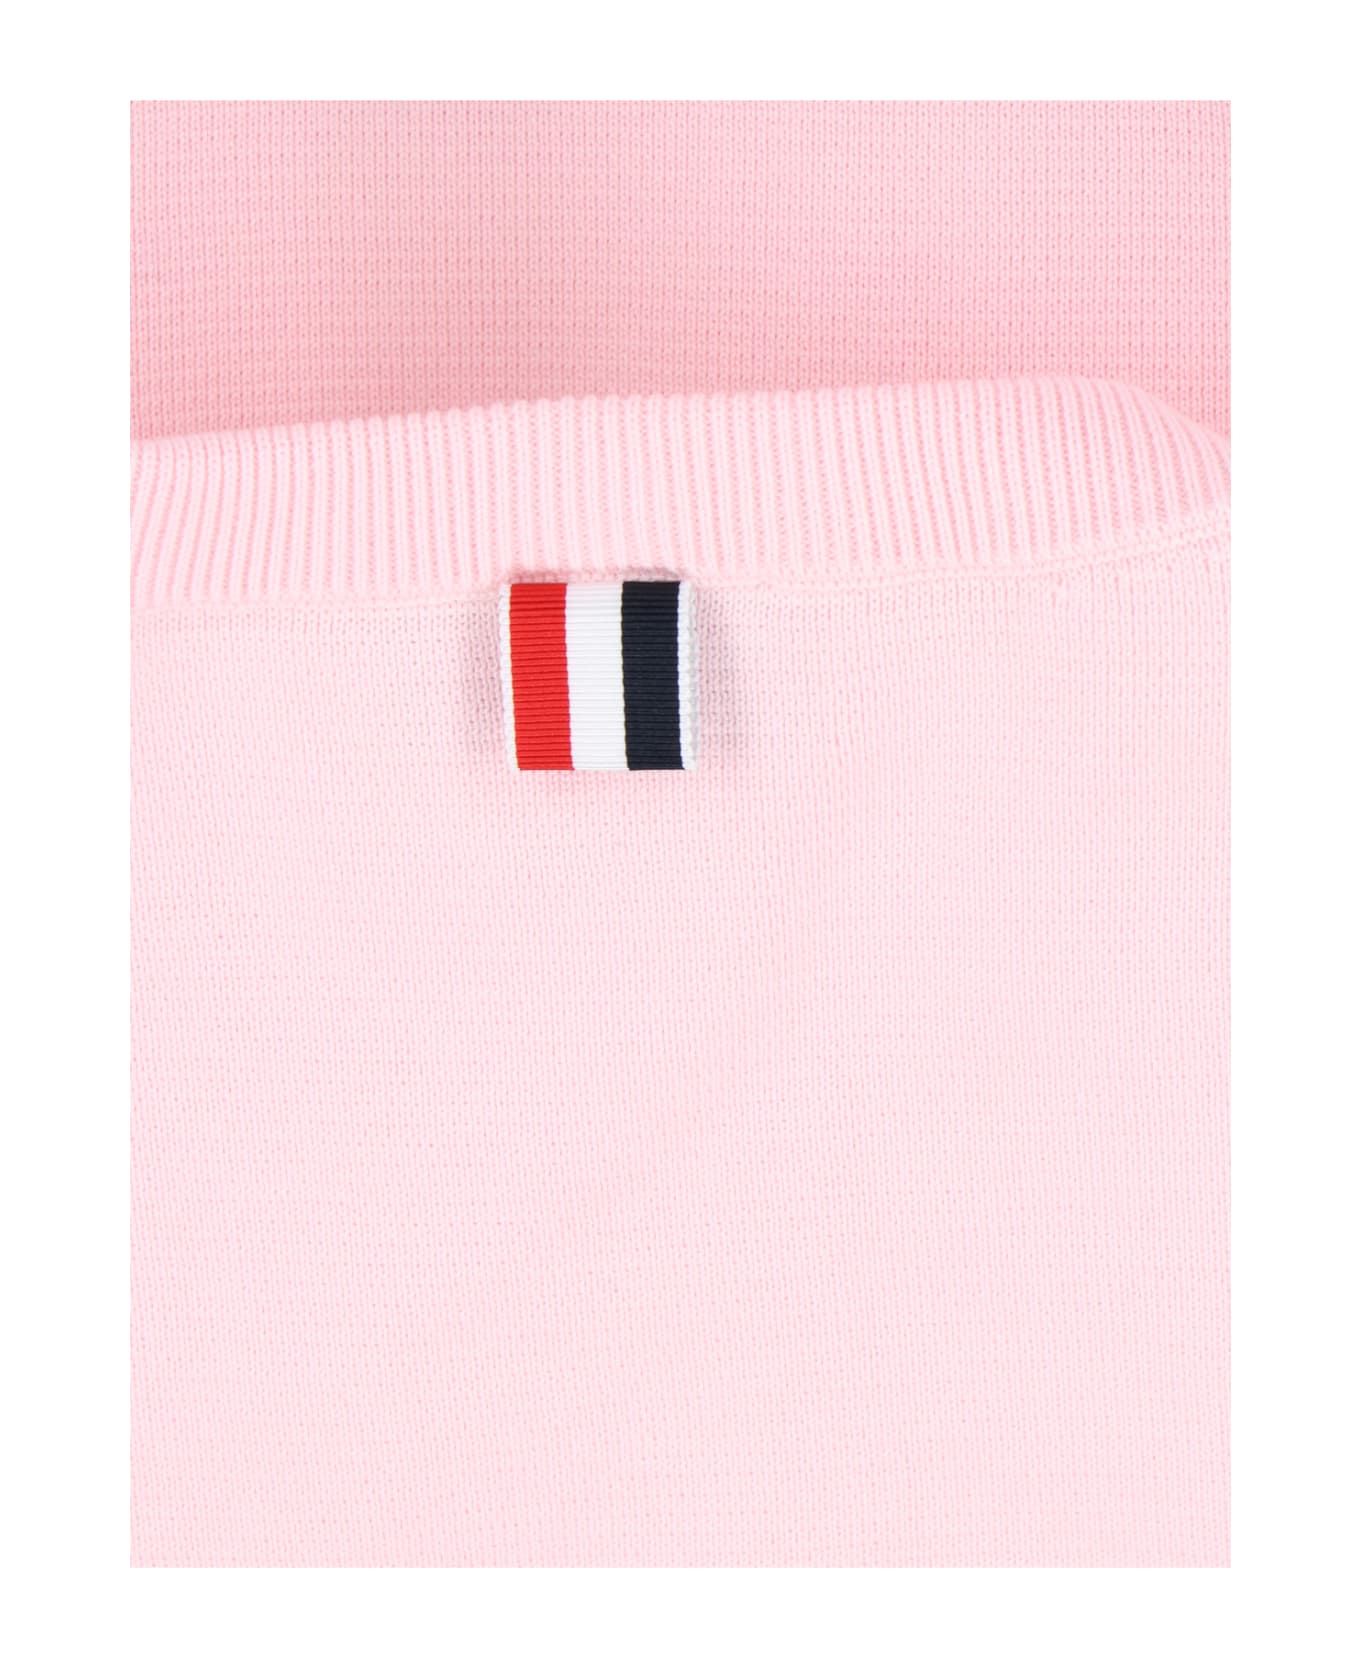 Thom Browne '4-bar' Sweater - Pink ニットウェア